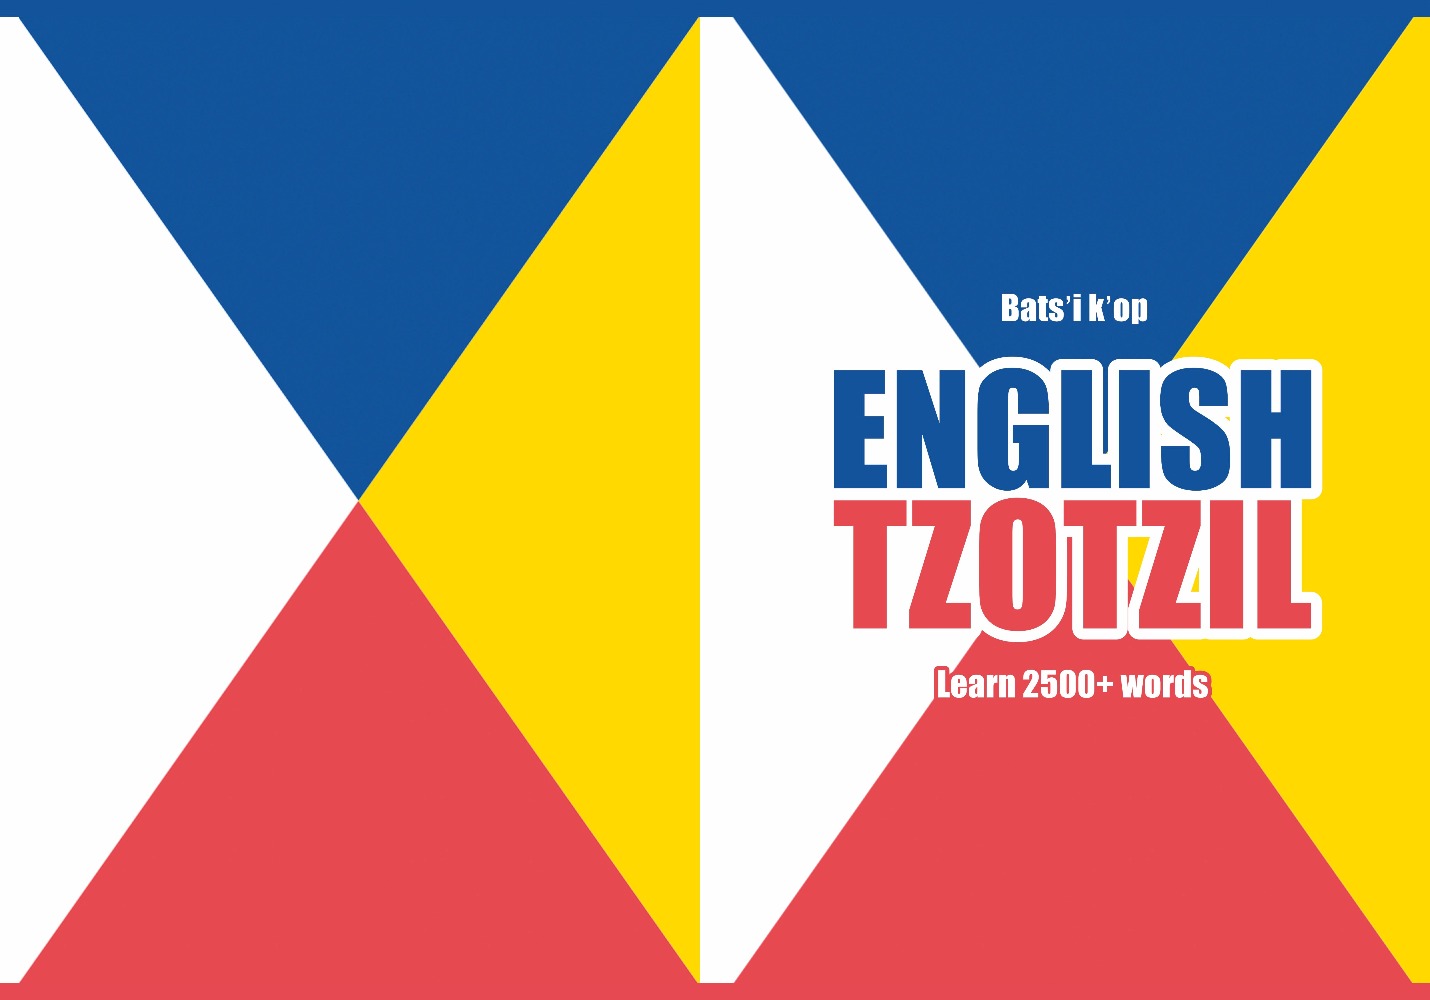 Tzotzil language learning notebook cover